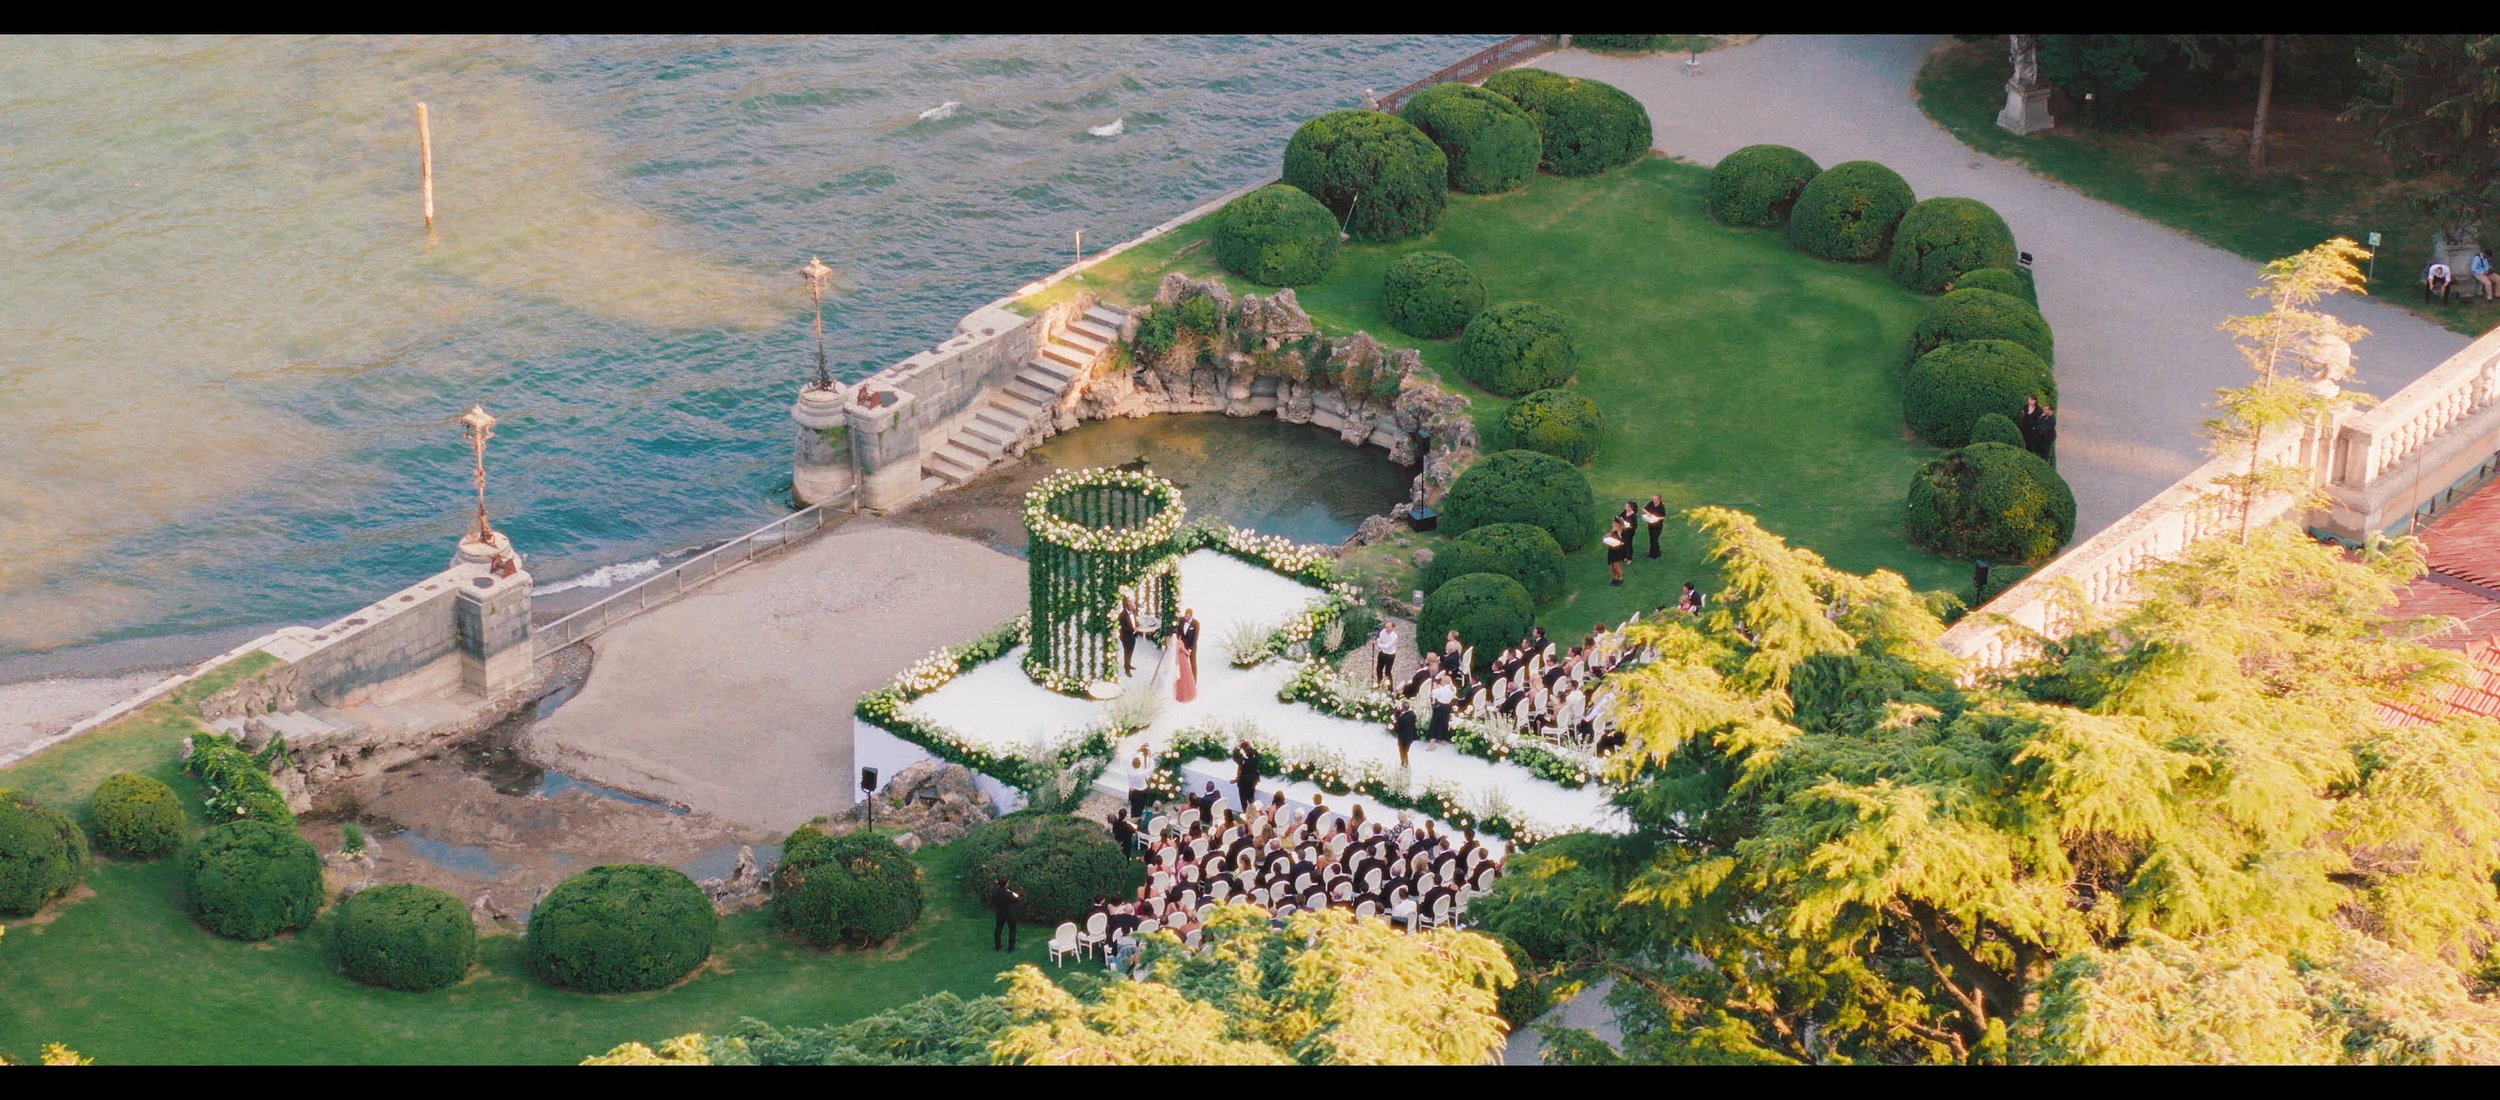  Luxury wedding ceremony decor drone shot at villa erba lake como with Alejandra Poupel and Sacks Production, Bottega53 and Vincenzo Dascanio with DJI inspire 3 prores 